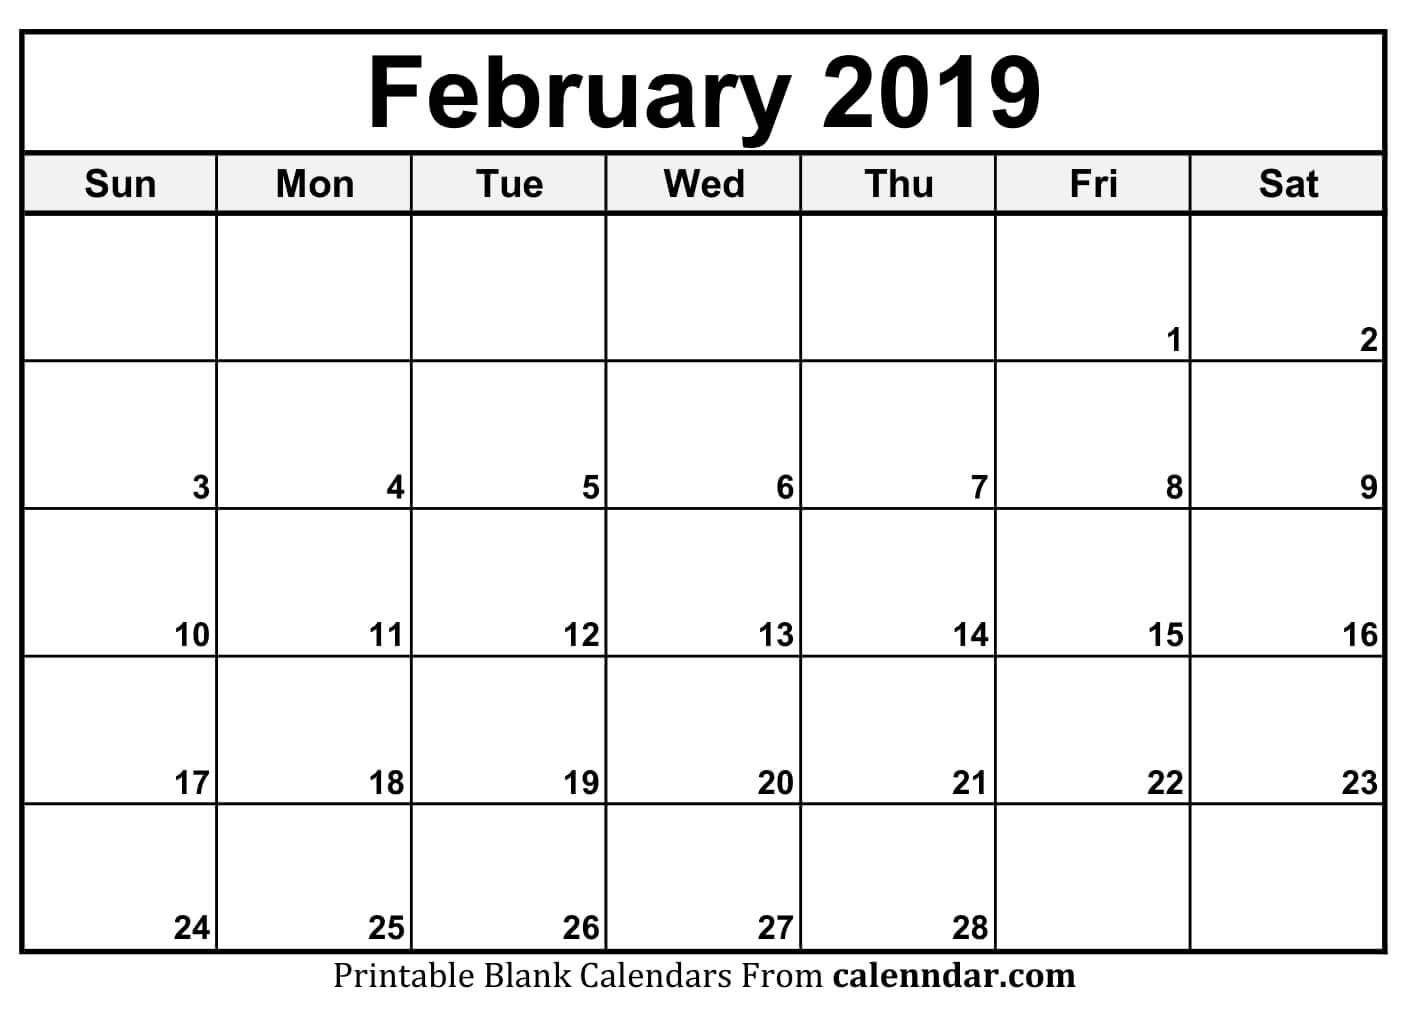 Free Printable Feb 2019 Calendar | Blank February 2019 Calendar Calendar Template To Print